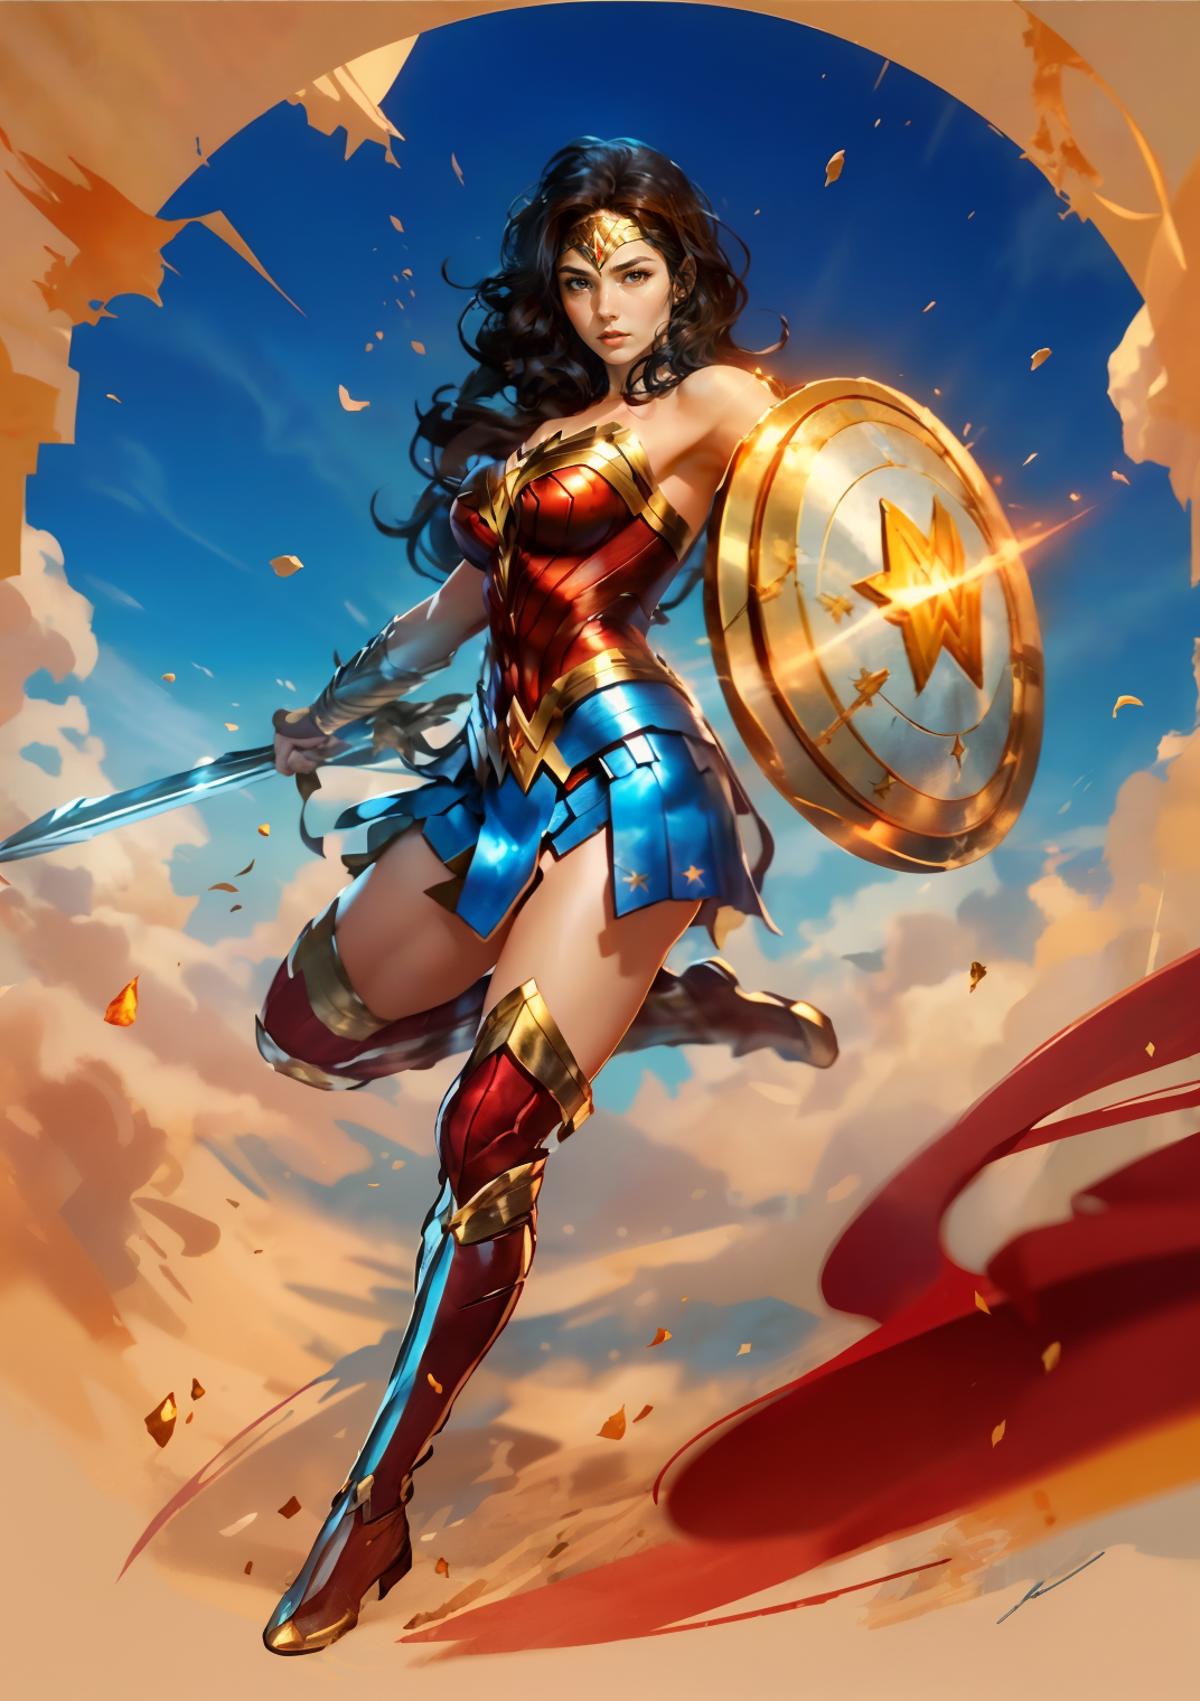 Wonder woman image by futurist